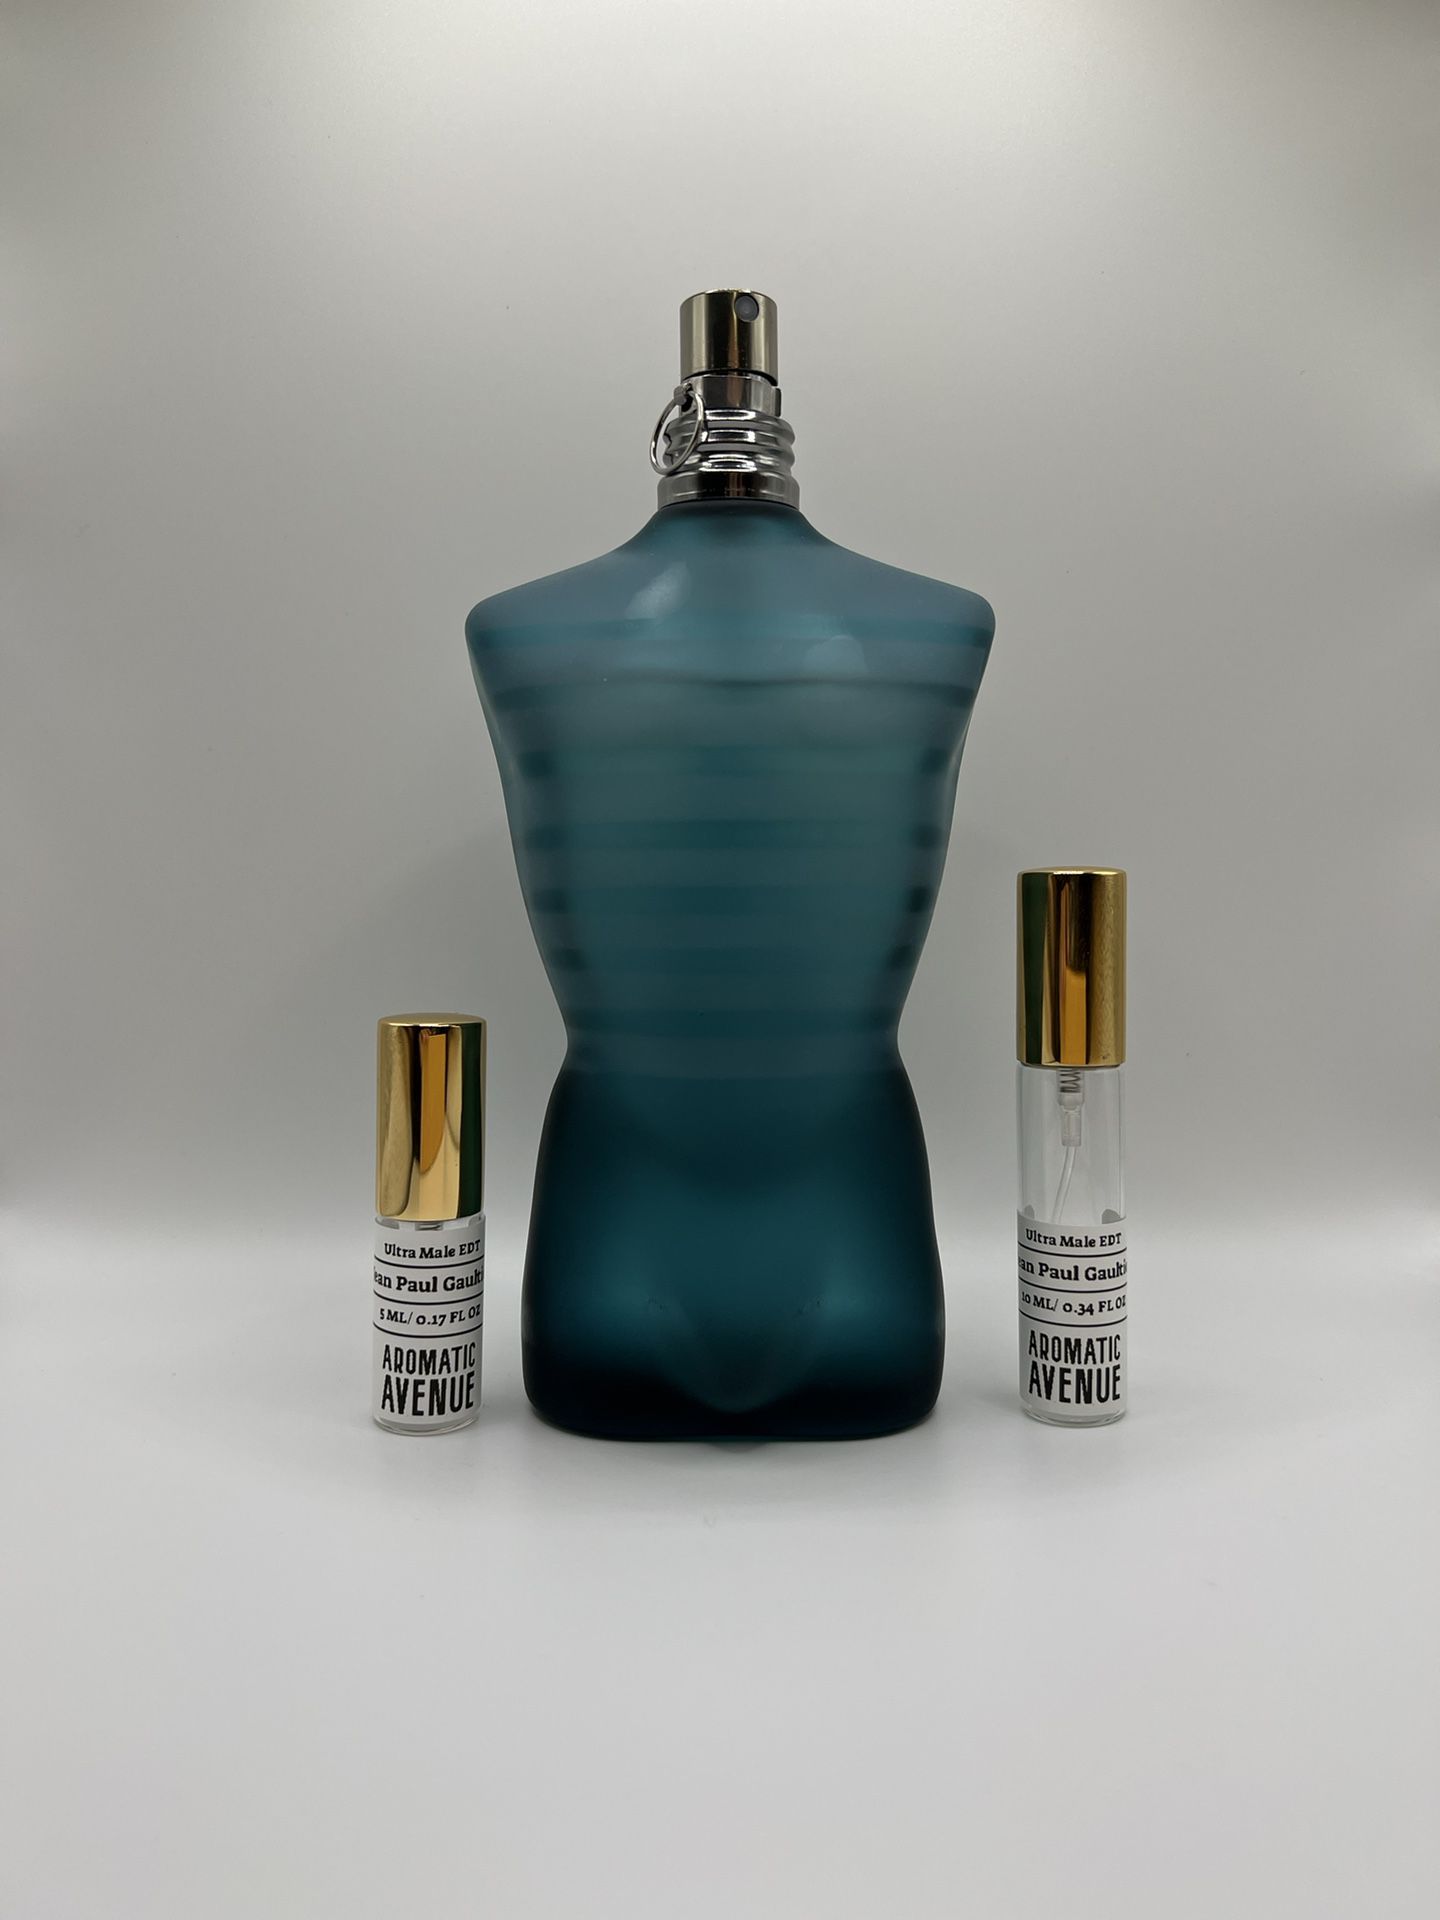 Jean Paul Gaultier Le Male EDT Fragrance Glass Decanter Sample Spray Travel Size Vial 10ML